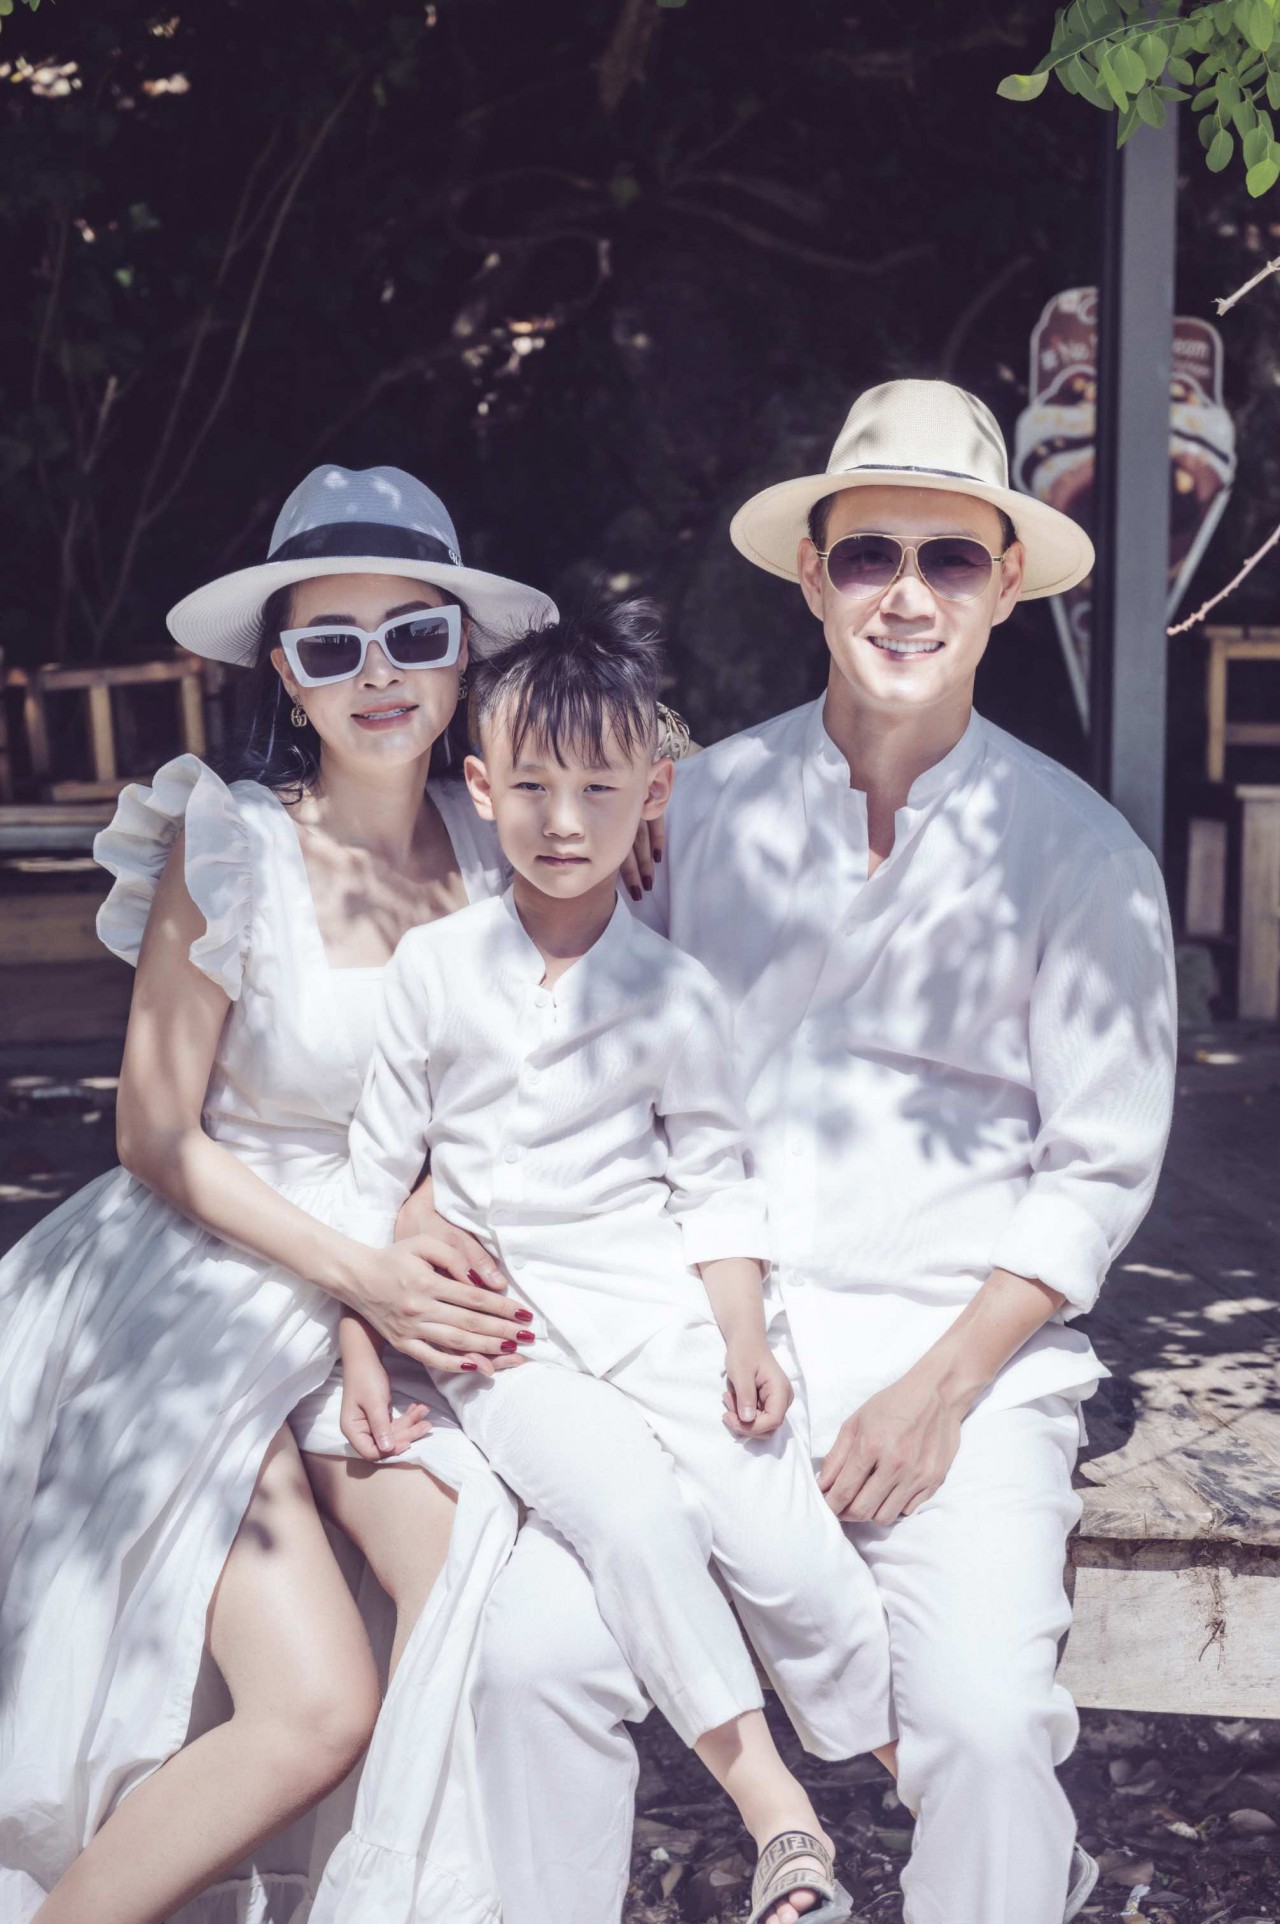 Mr. Le Minh Khoa with his family.